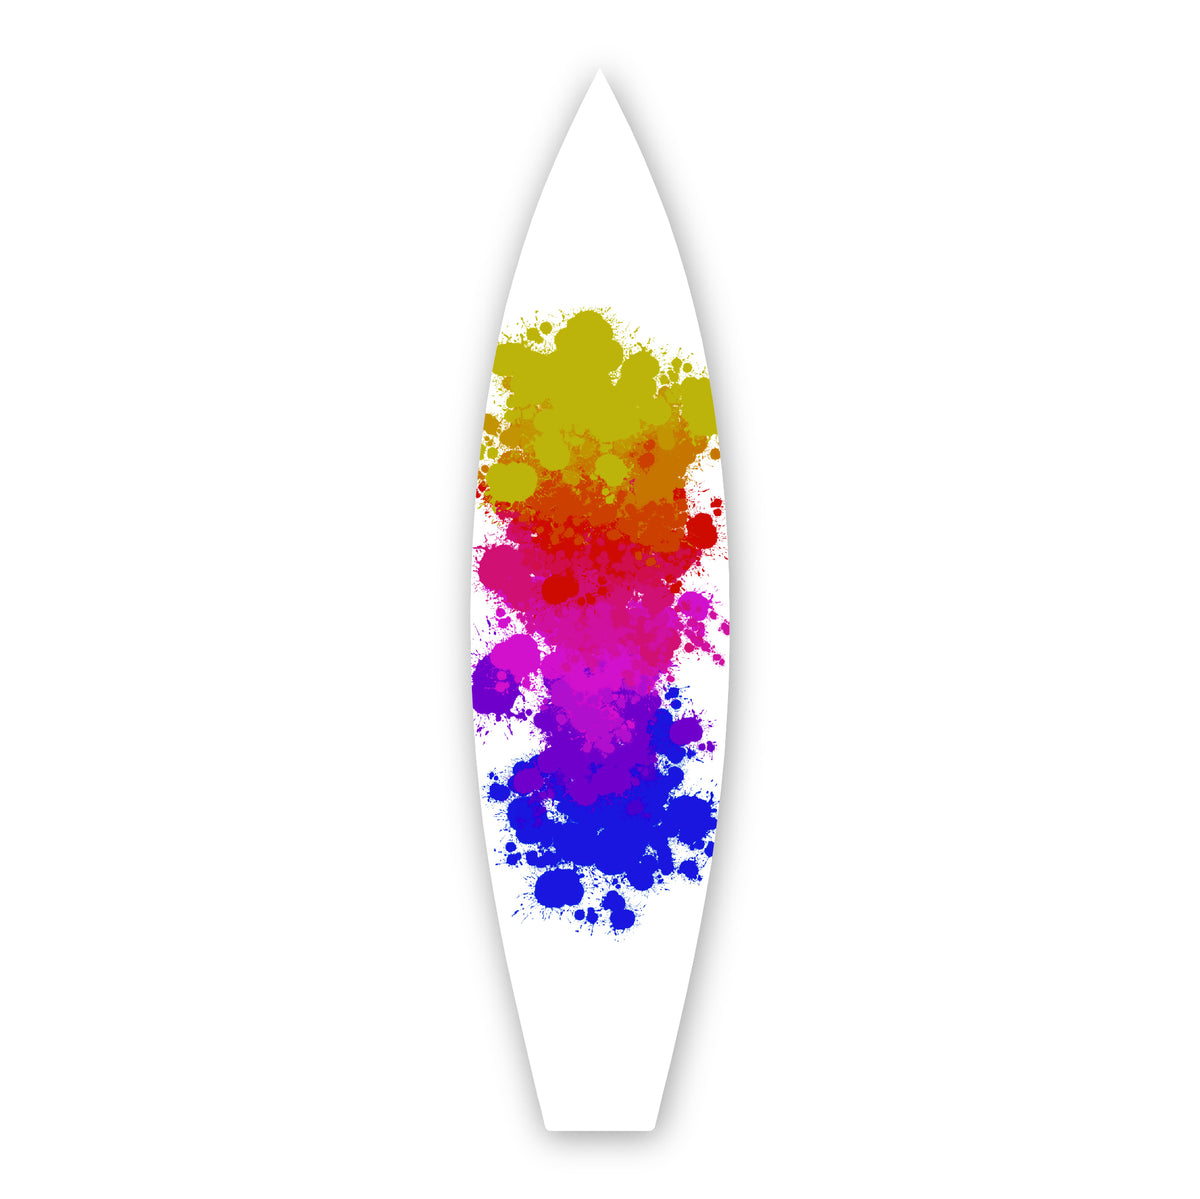 Traveling Splash - Surfboard Art